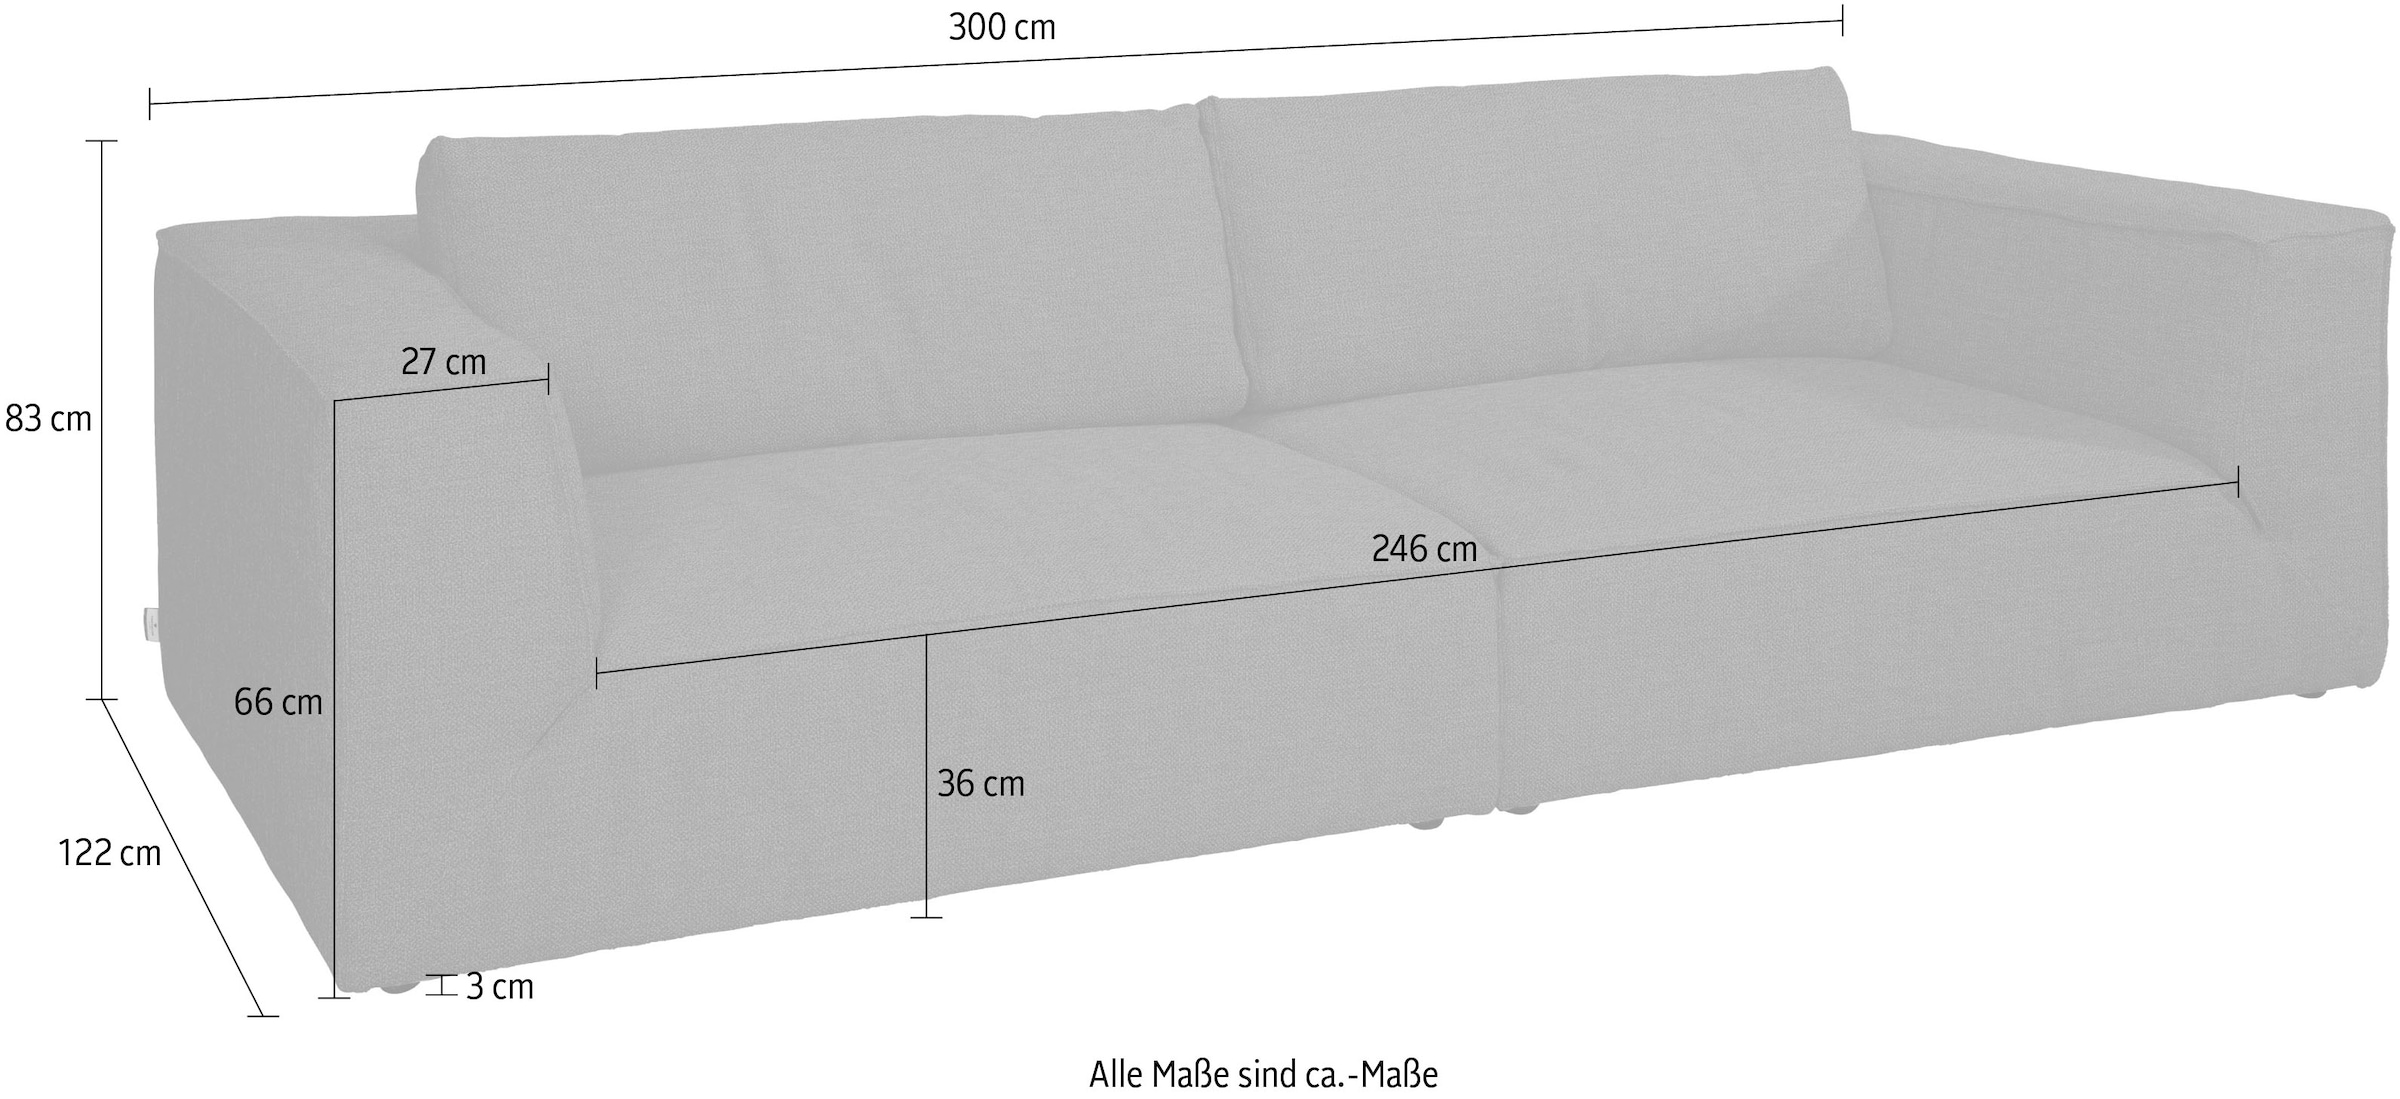 TOM TAILOR HOME Big-Sofa »BIG CUBE STYLE«, Breite 300 cm auf Raten kaufen